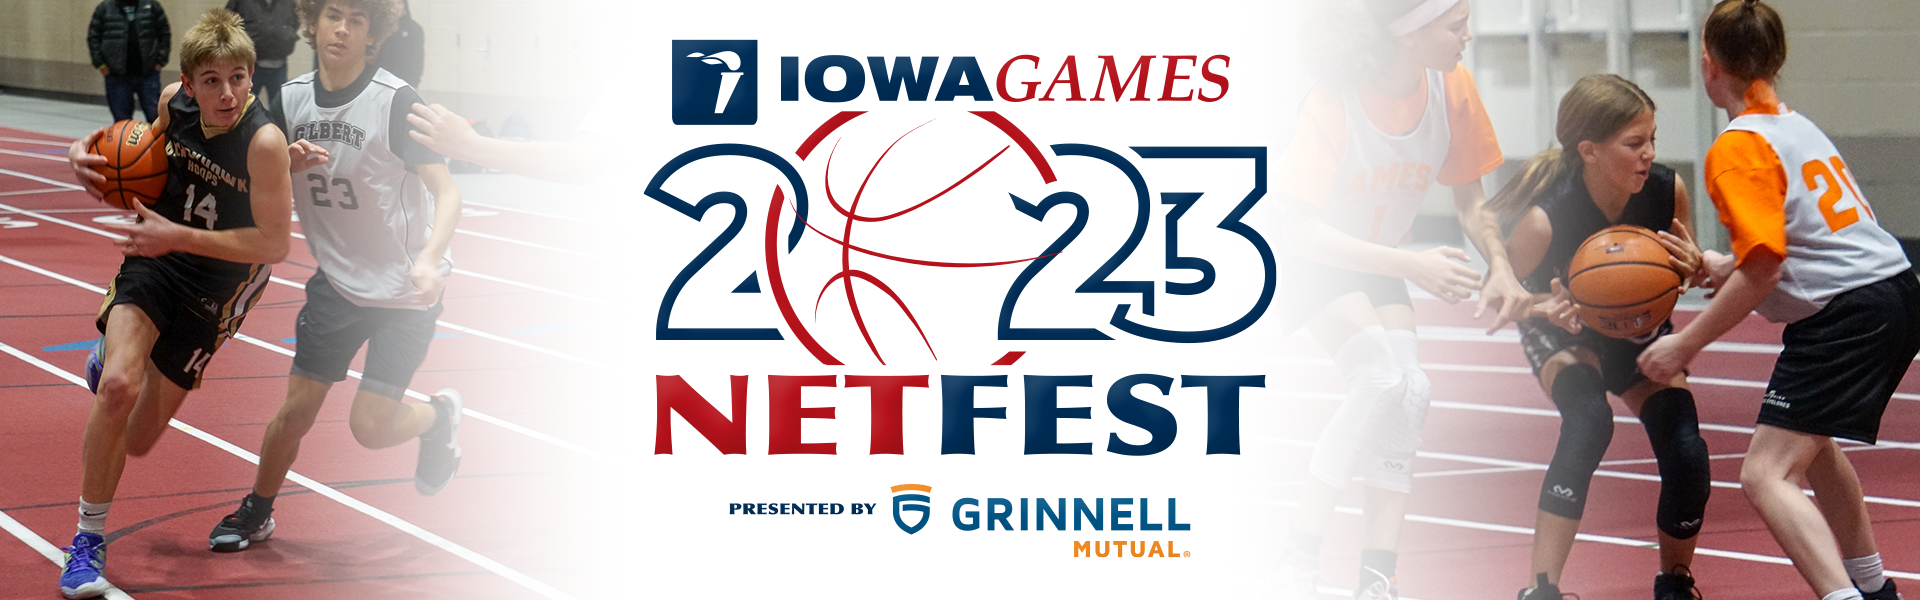 2023 Iowa Games Net Fest Basketball Tournament